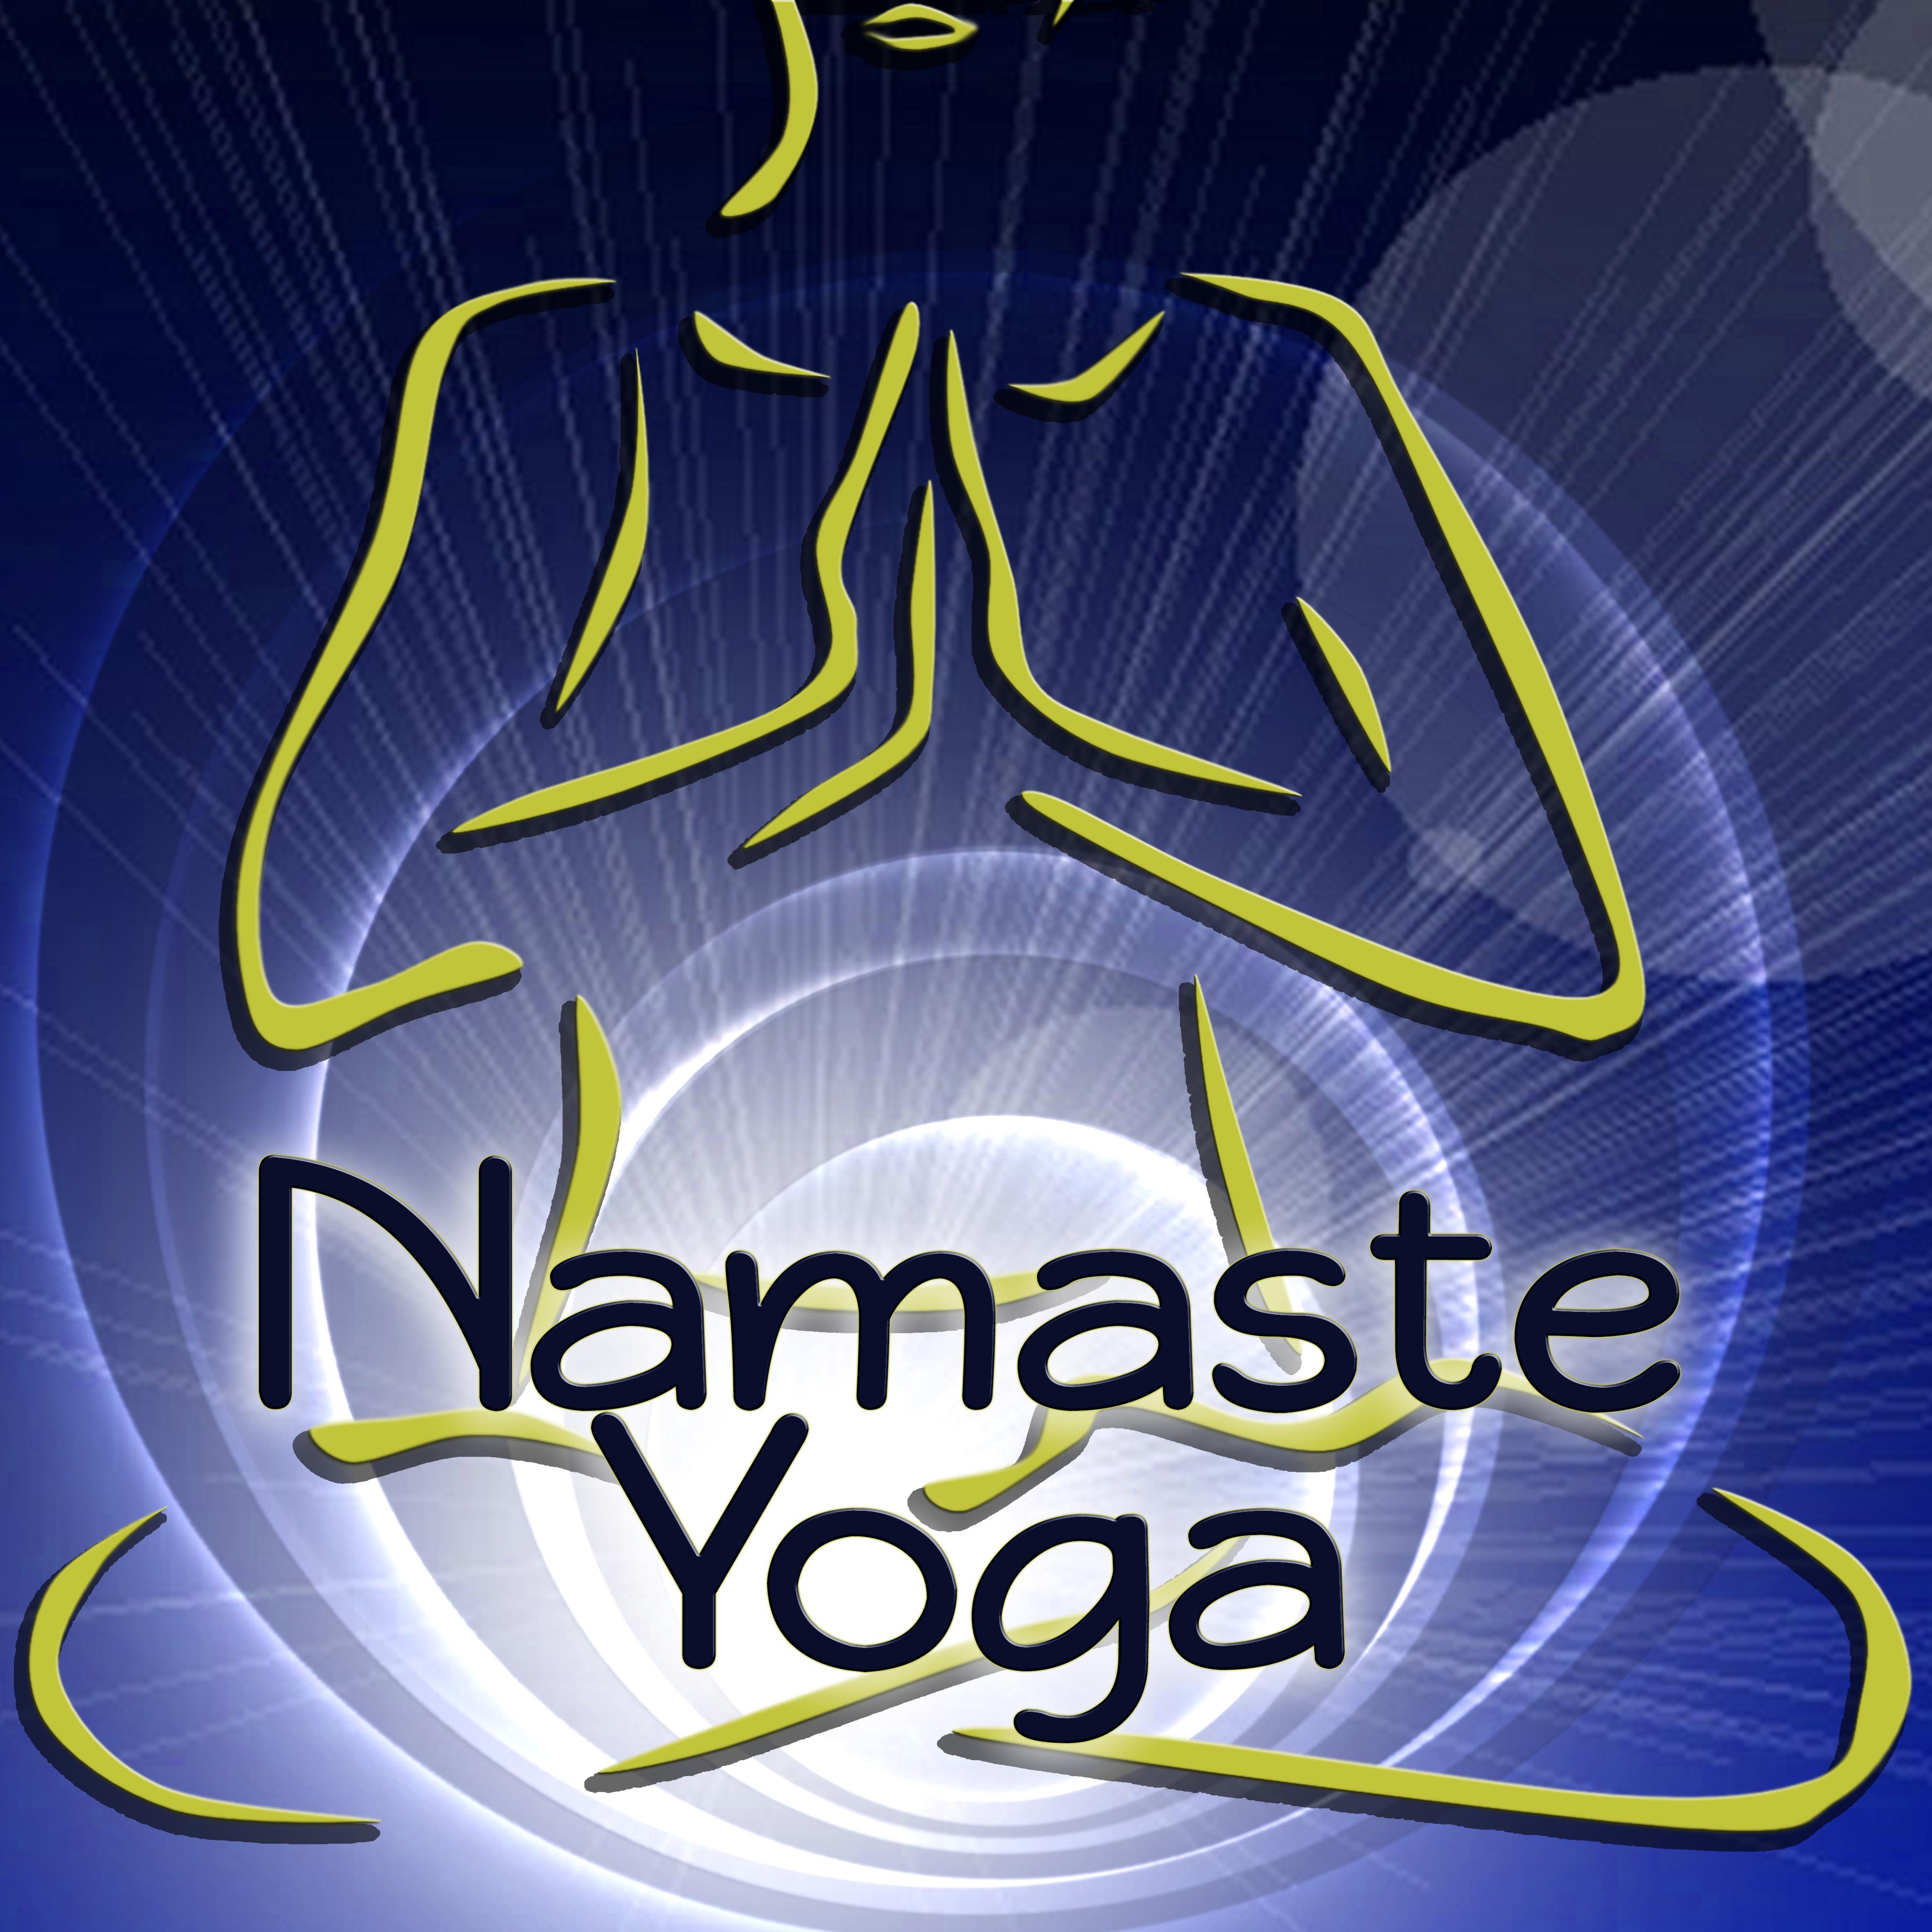 Namaste Yoga - Sounds of Nature for Pure Yoga, Ambient Music & Yoga Nidra, Inner Balance, Yoga for Beginners, Calming Music, Mindfulness Meditation Spiritual Healing, Sounds of the Ocean